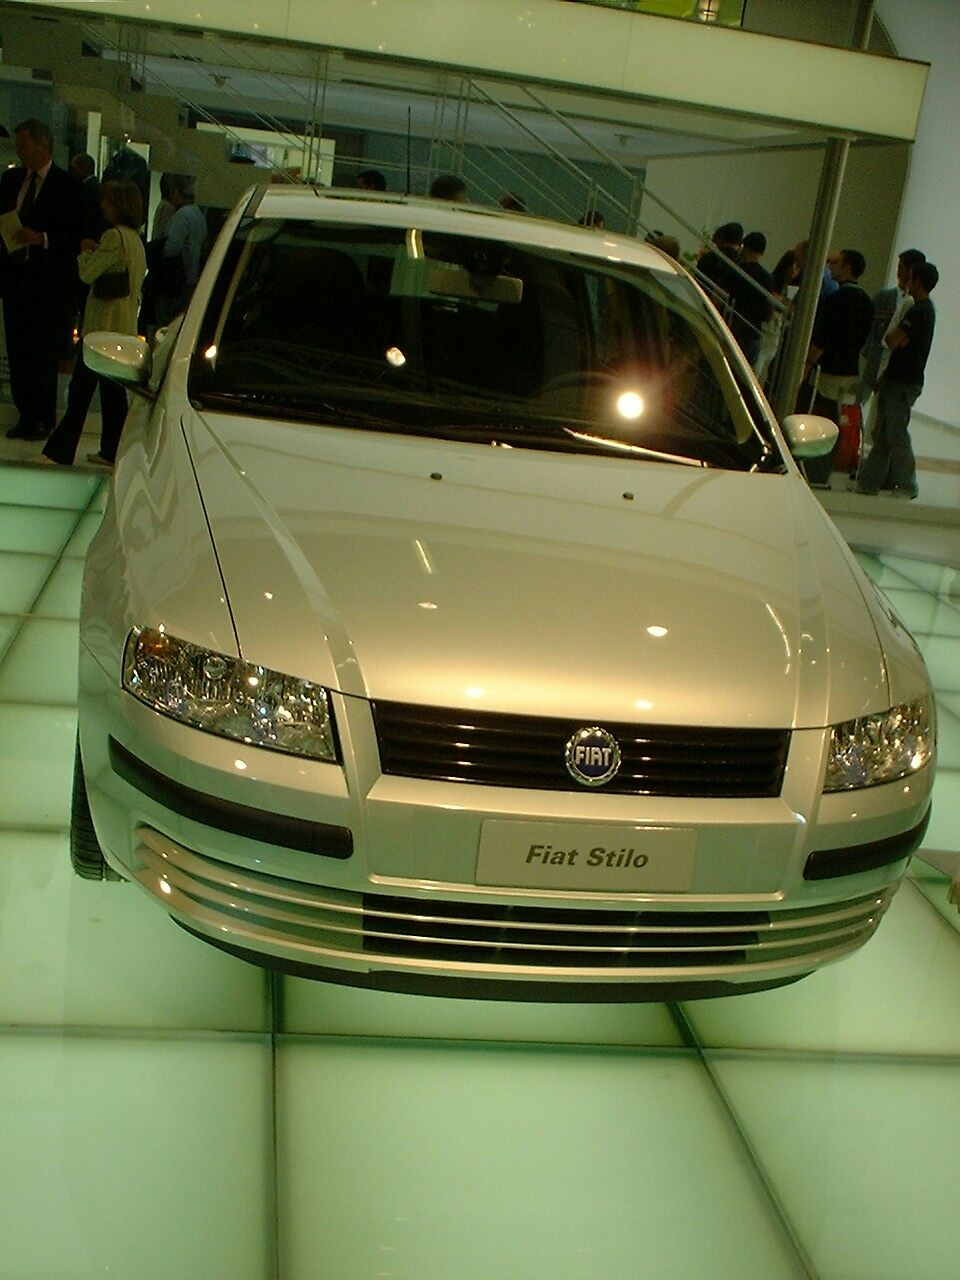 Fiat Stilo at the 2003 Frankfurt IAA